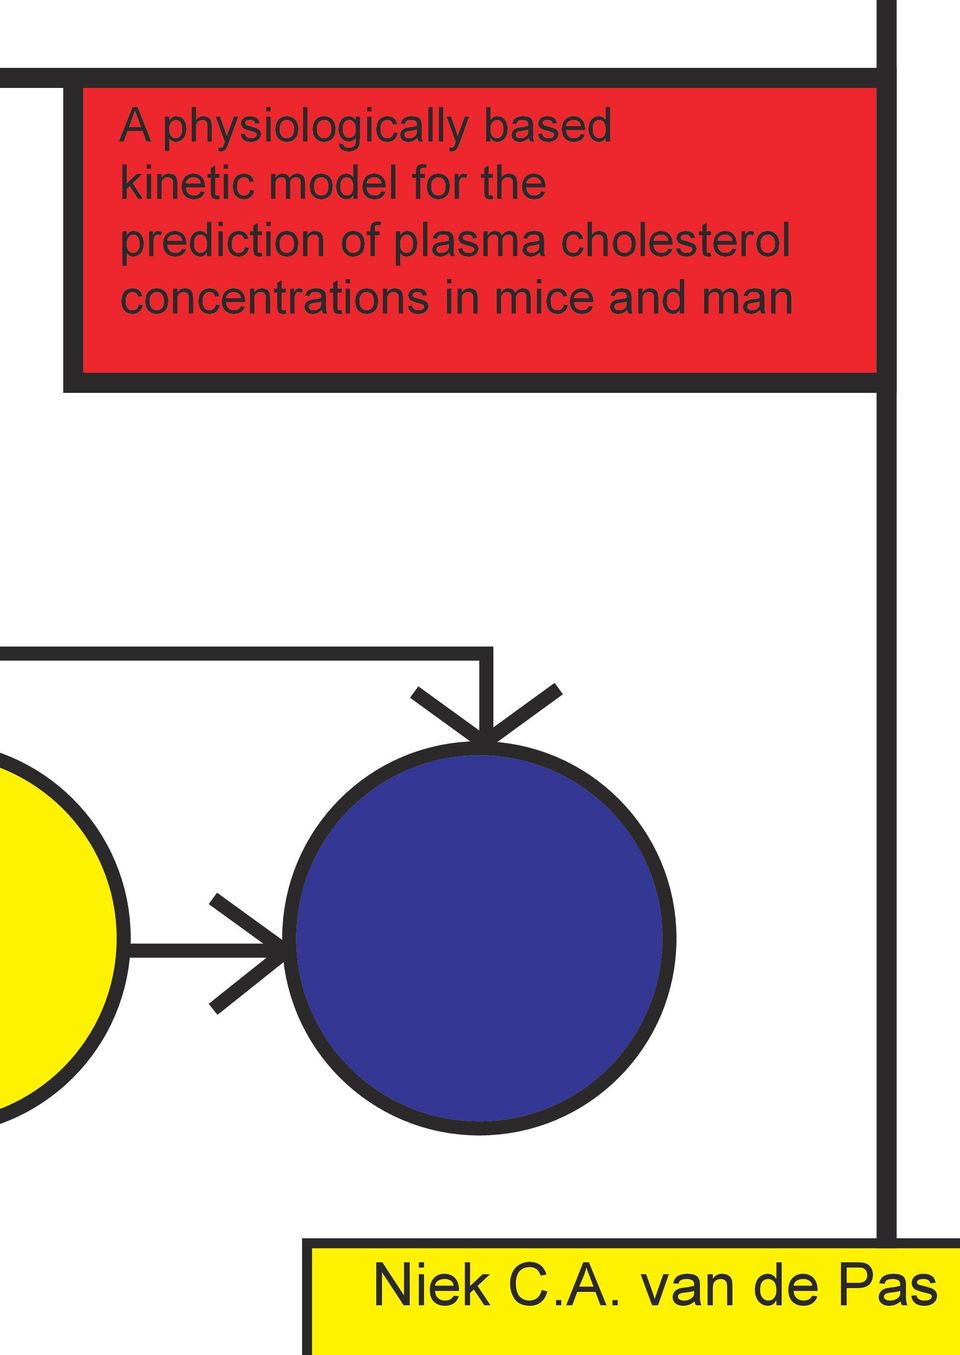 plasma cholesterol